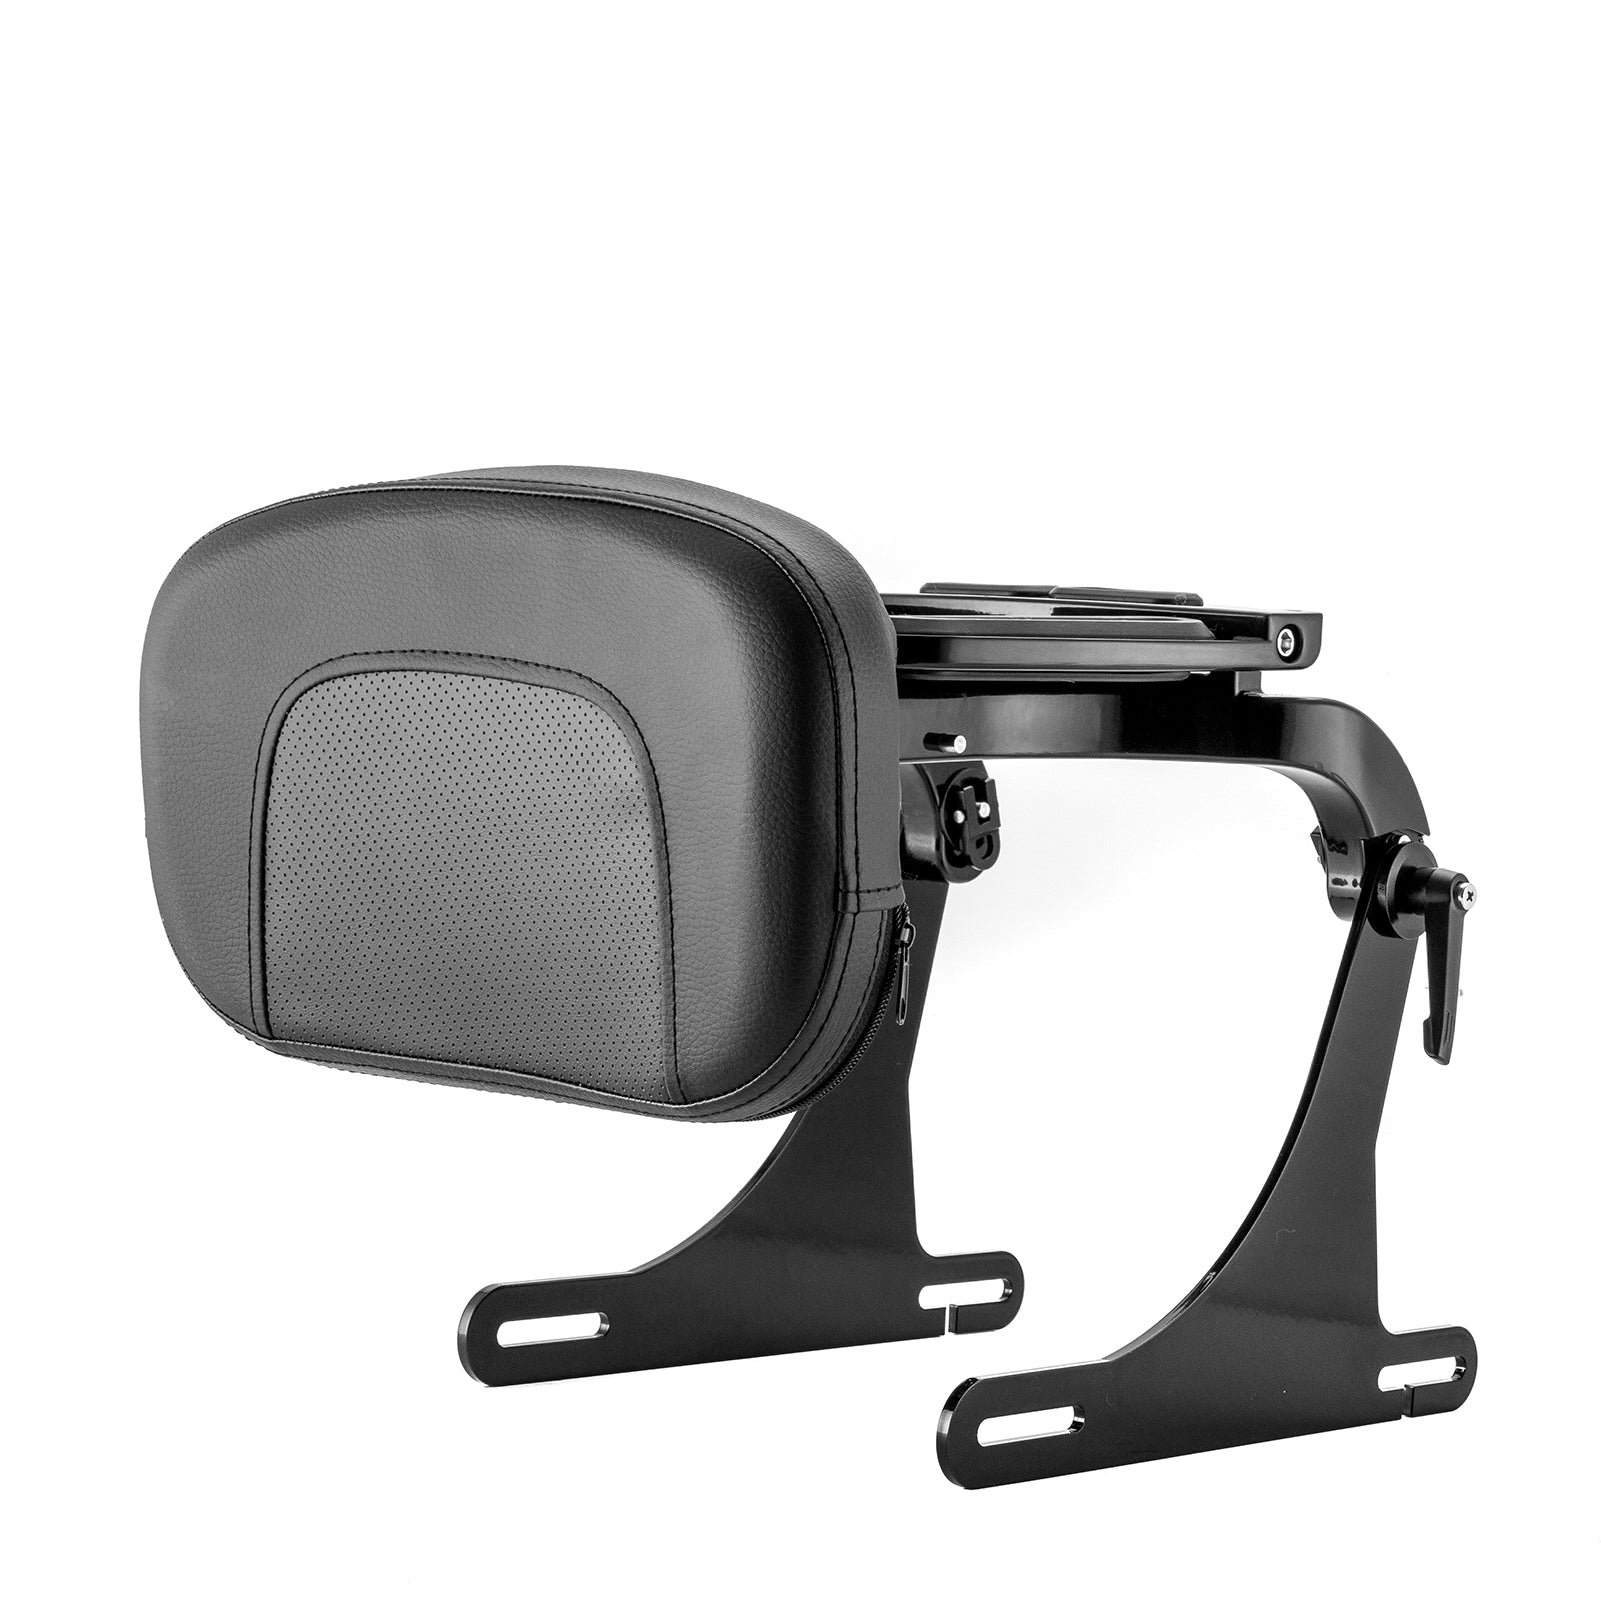 2016-2017 Dyna Low Rider FXDLS Street Bob FXDB Gloss Black Multi-Purpose Adjustable Backrest